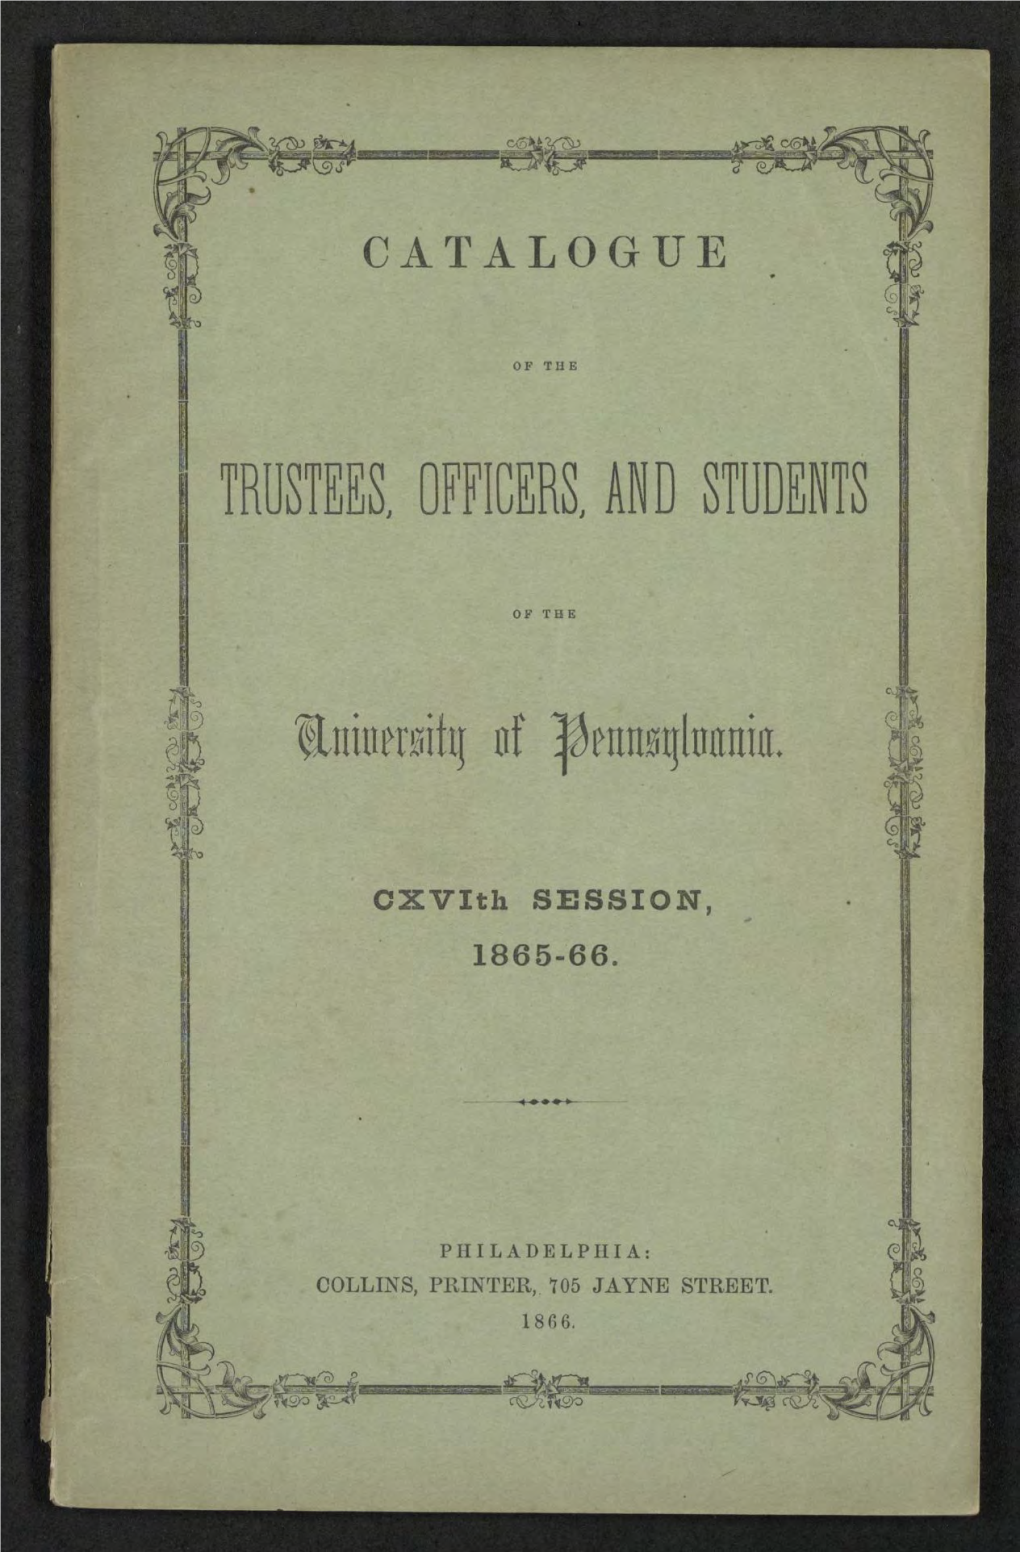 University of Pennsylvania Catalogue, 1865-66